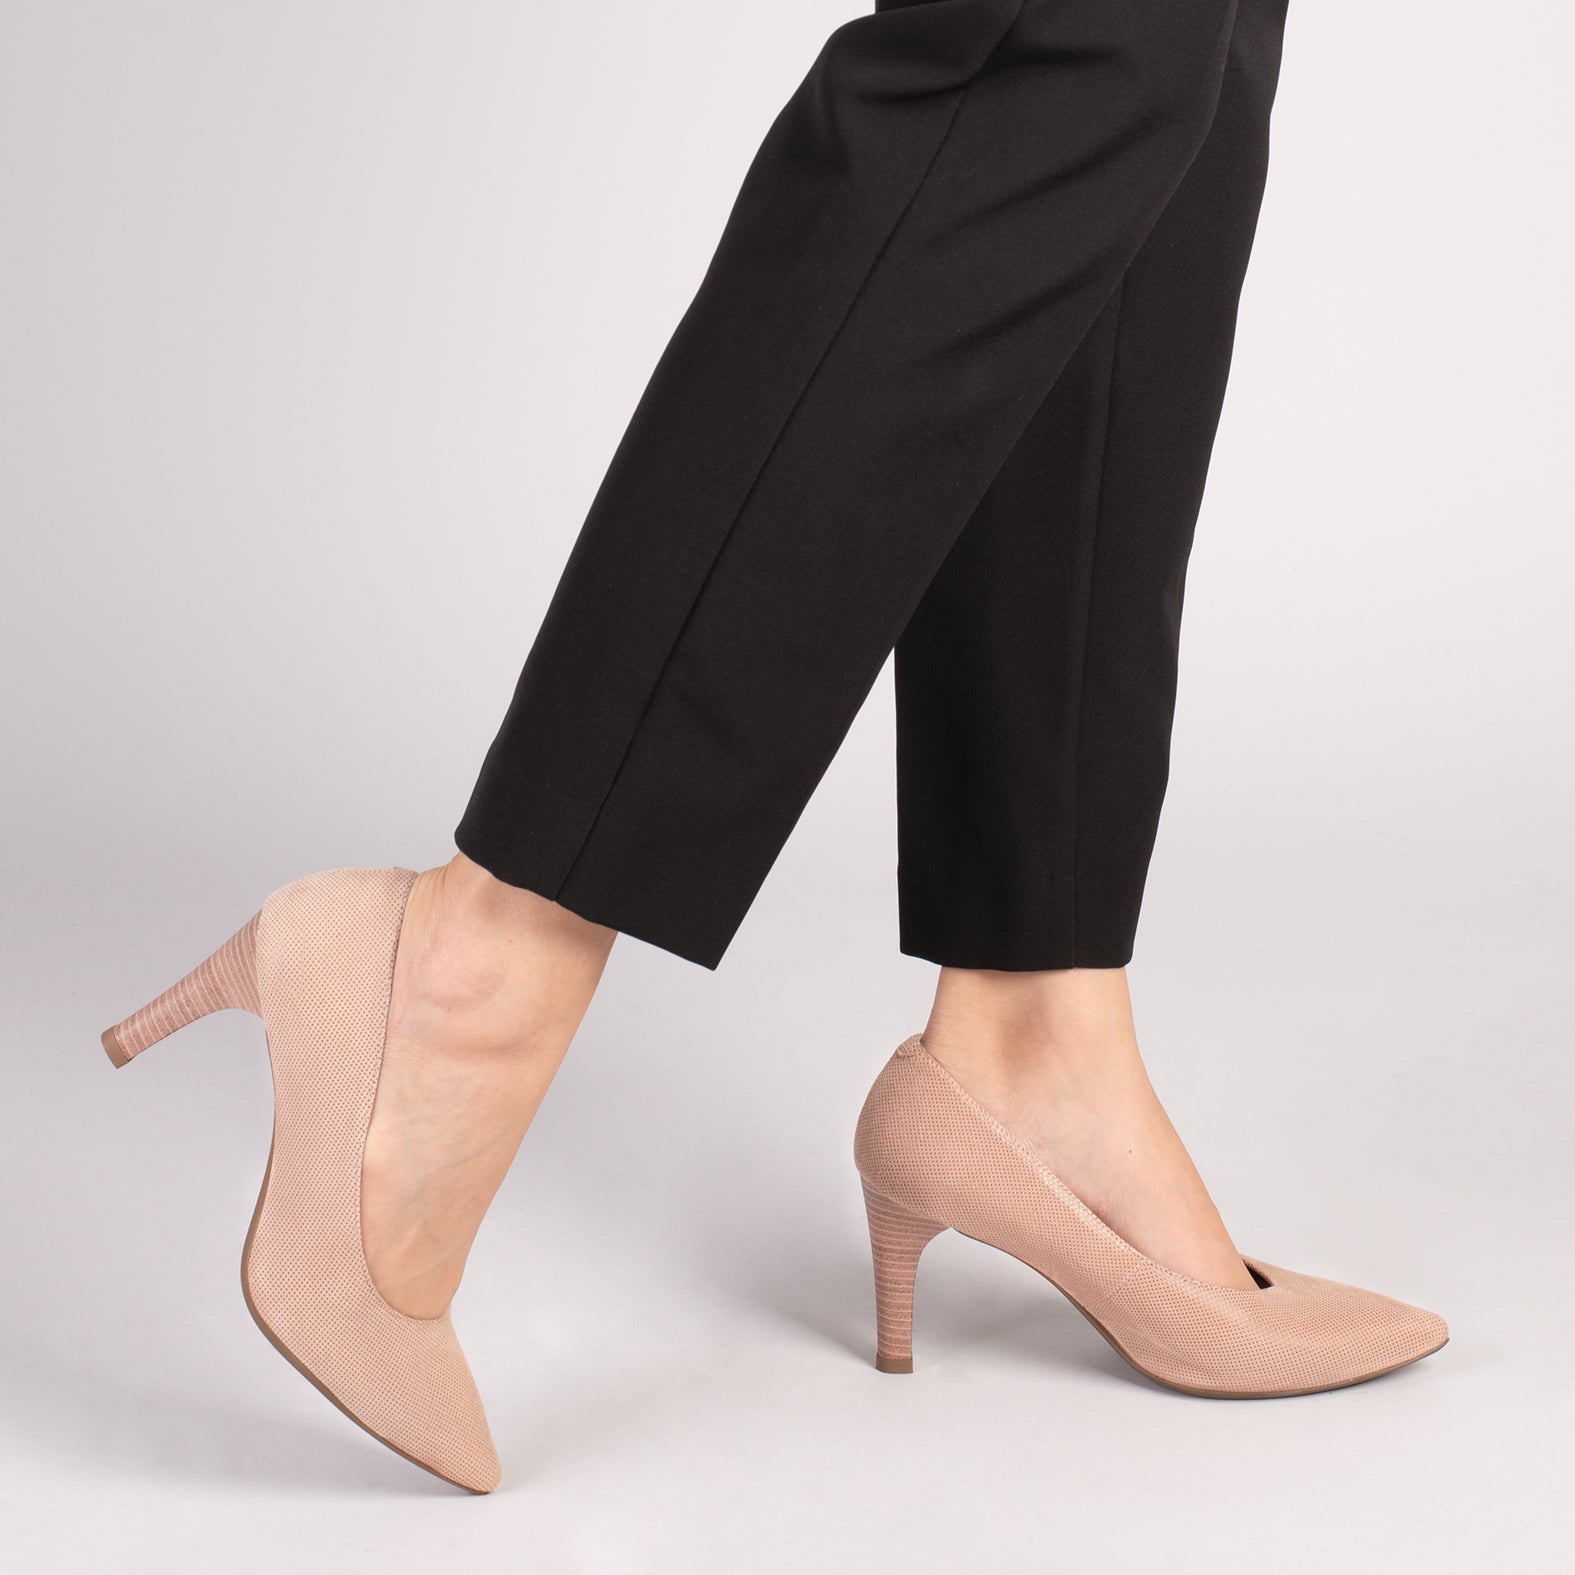 GLAM FANTASY – NUDE elegant high heels